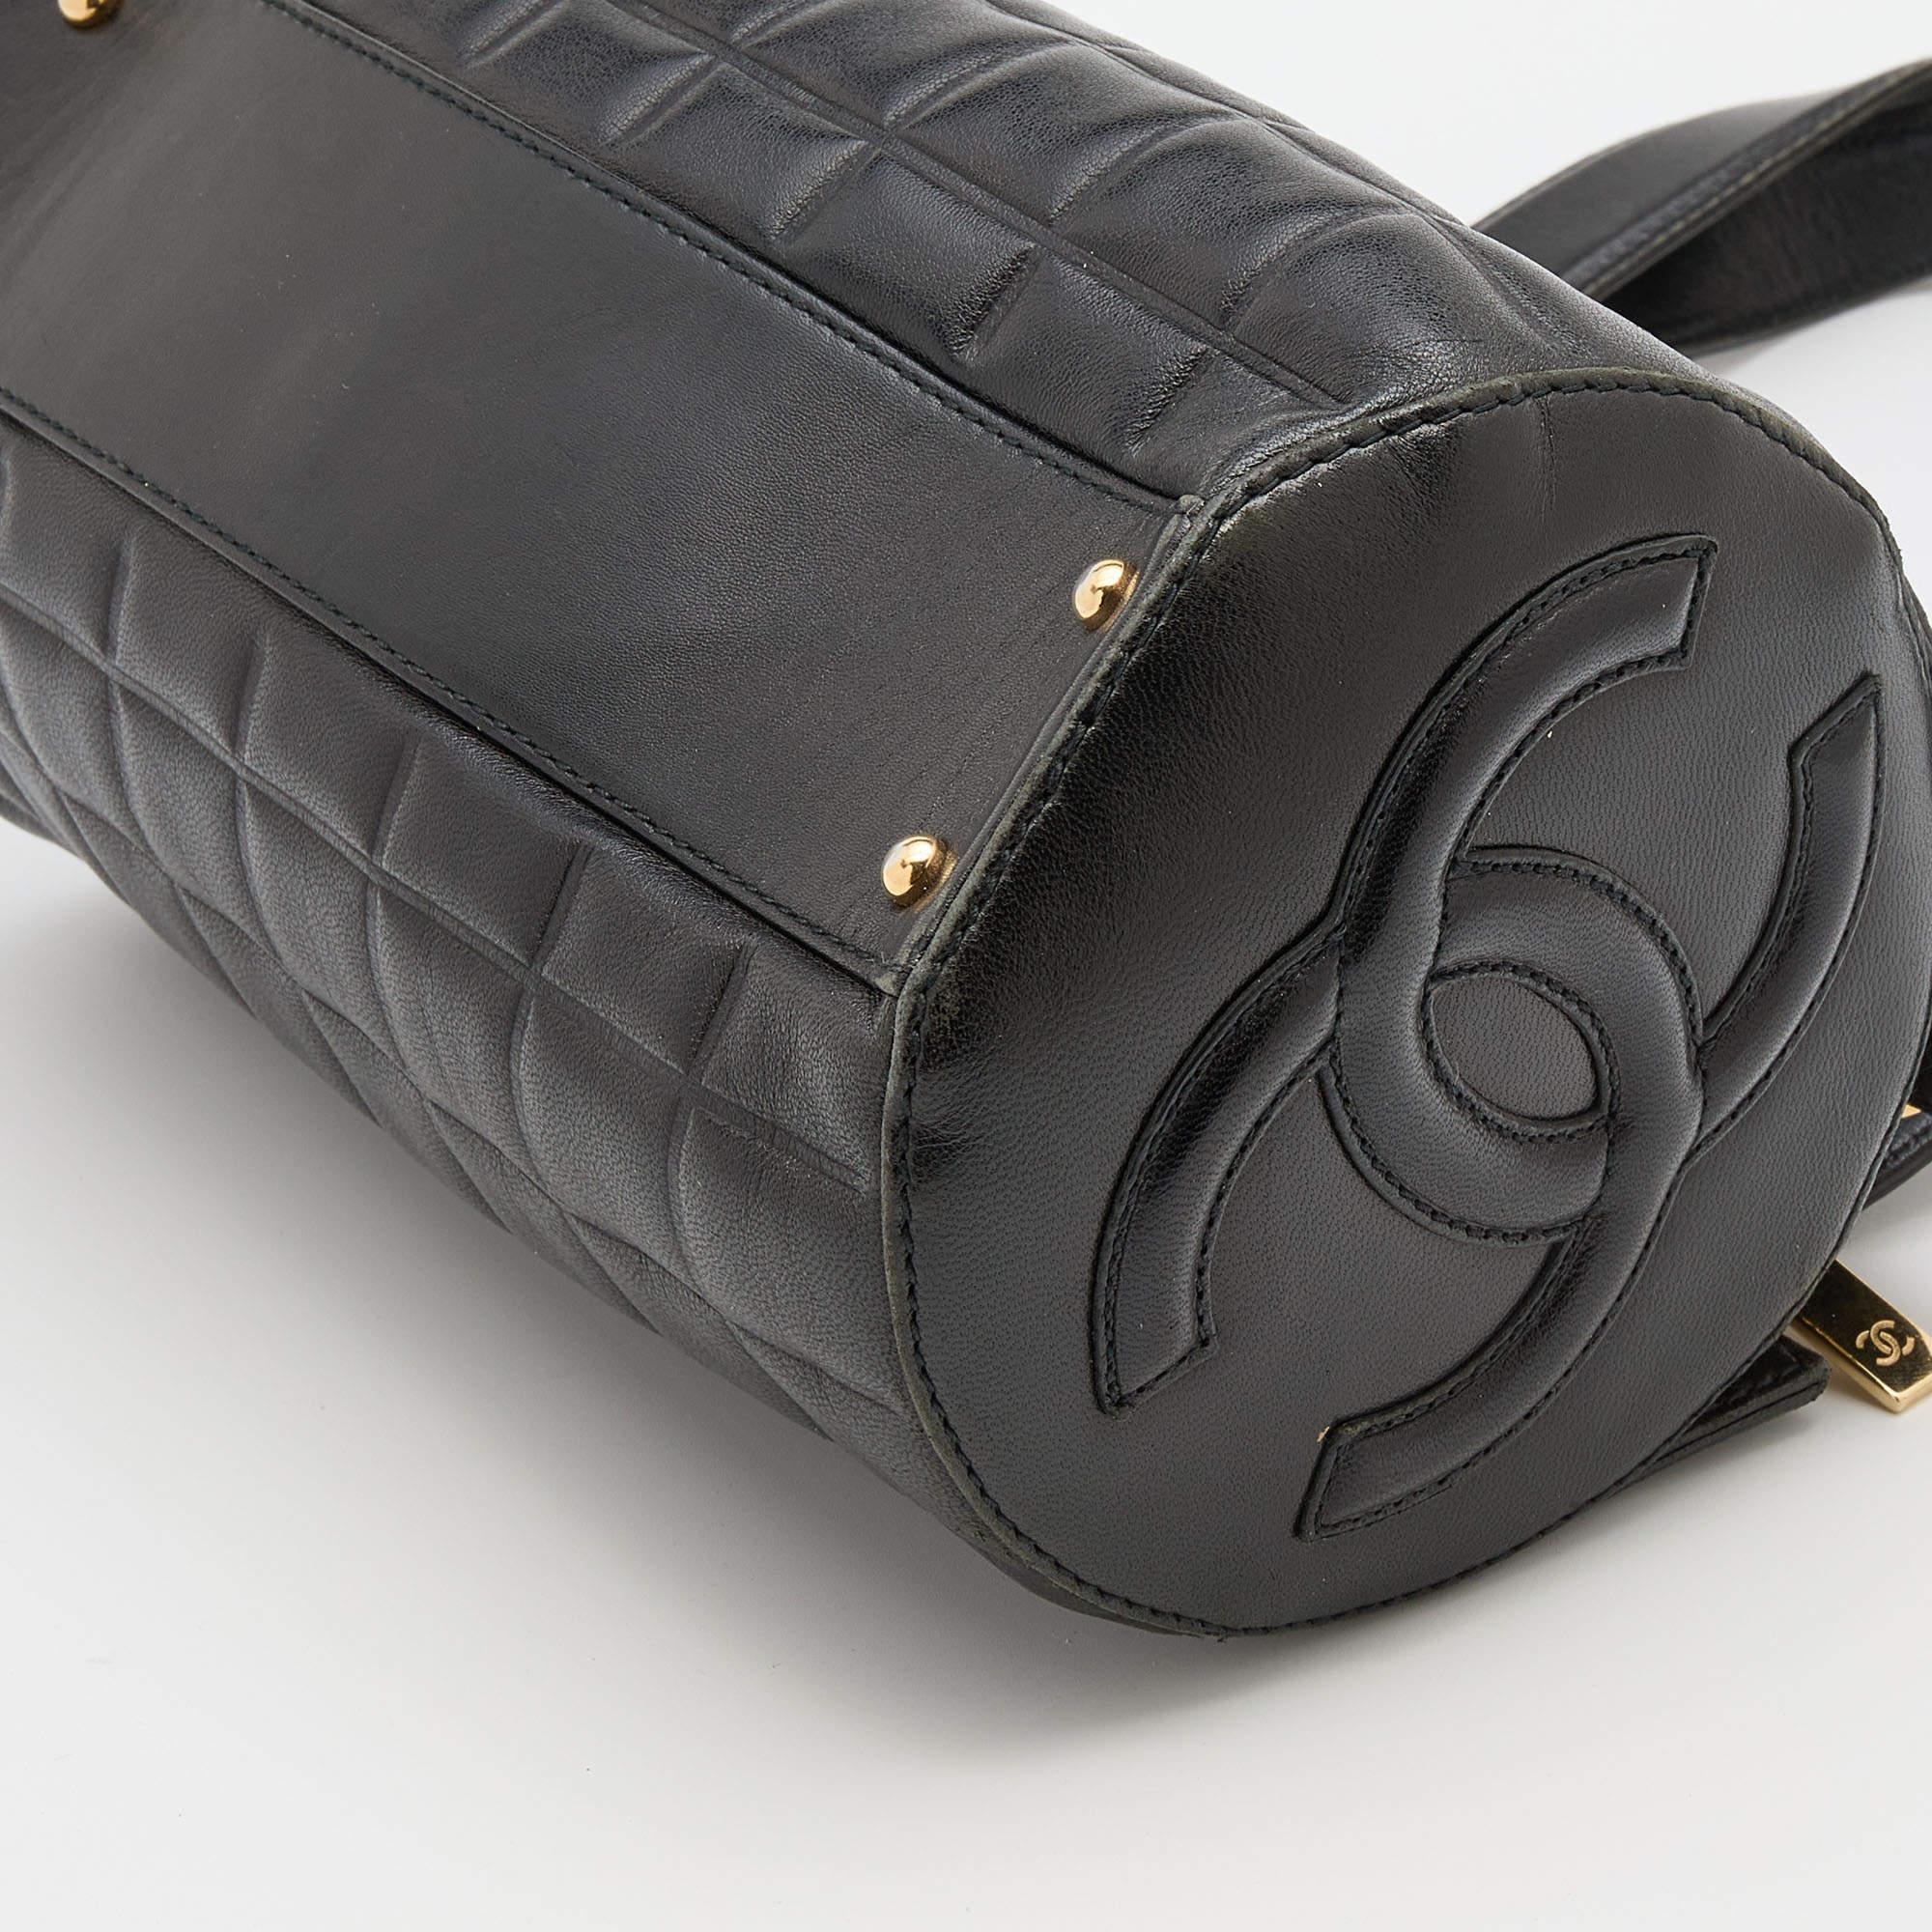 Chanel Black Leather Chocolate Bar Barrel Bag 5